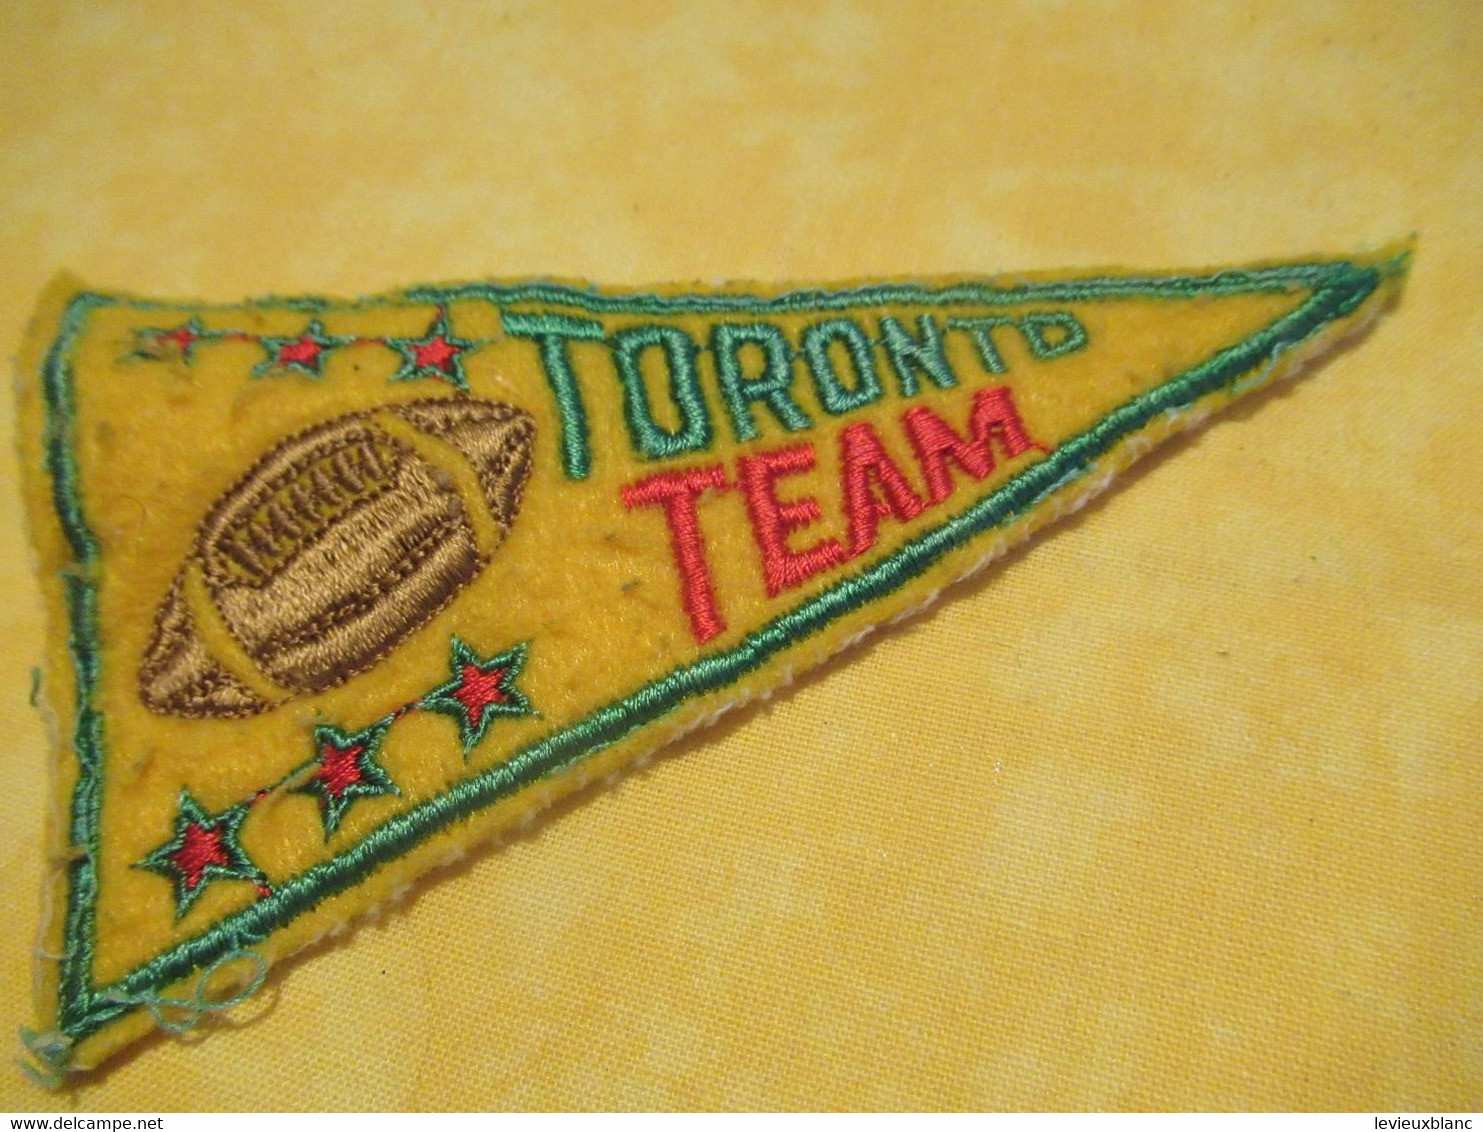 Sport / Ecusson Ancien Usagé /Foot-Ball Américain/ TORONTO TEAM/ Canada, Ontario / Vers 1960 -1970       ET370 - Blazoenen (textiel)